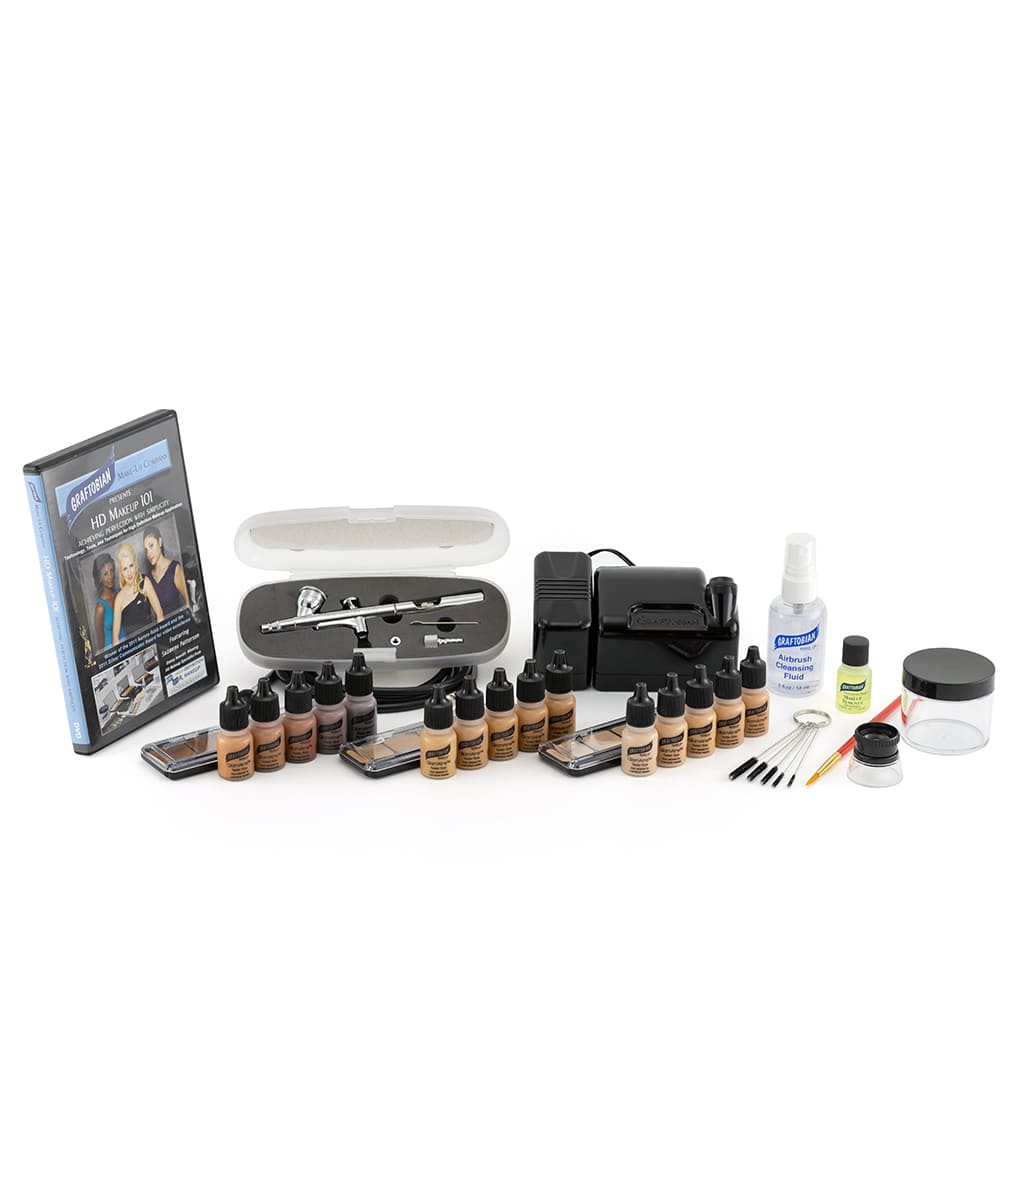 Forest Nymph Makeup Kit – Graftobian Make-Up Company